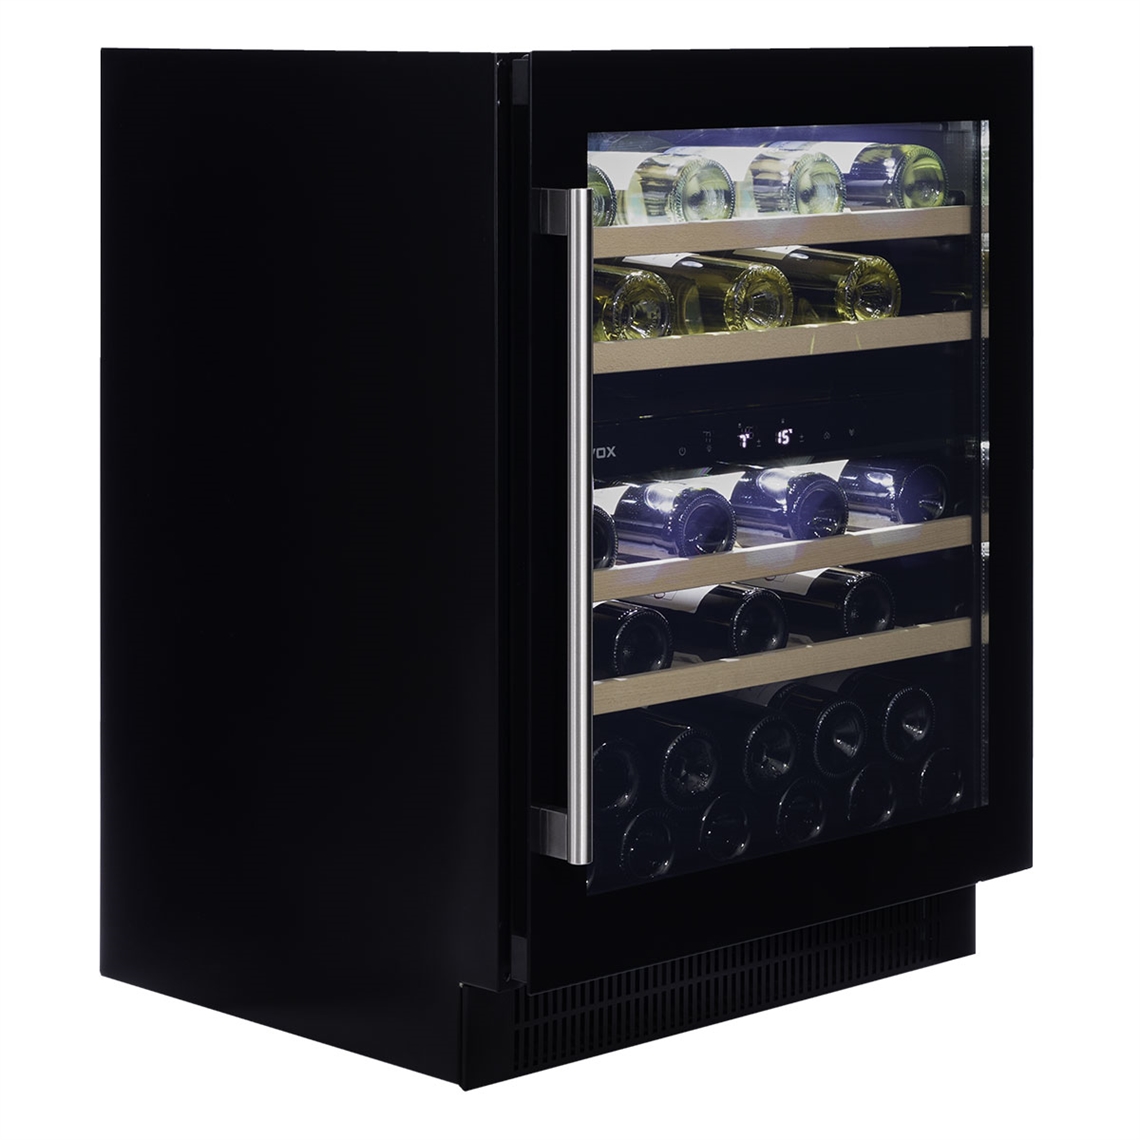 Dunavox Wine Cabinet Flow - 2-Temperature Built-In Under Counter - Black DAUF-39.121DB